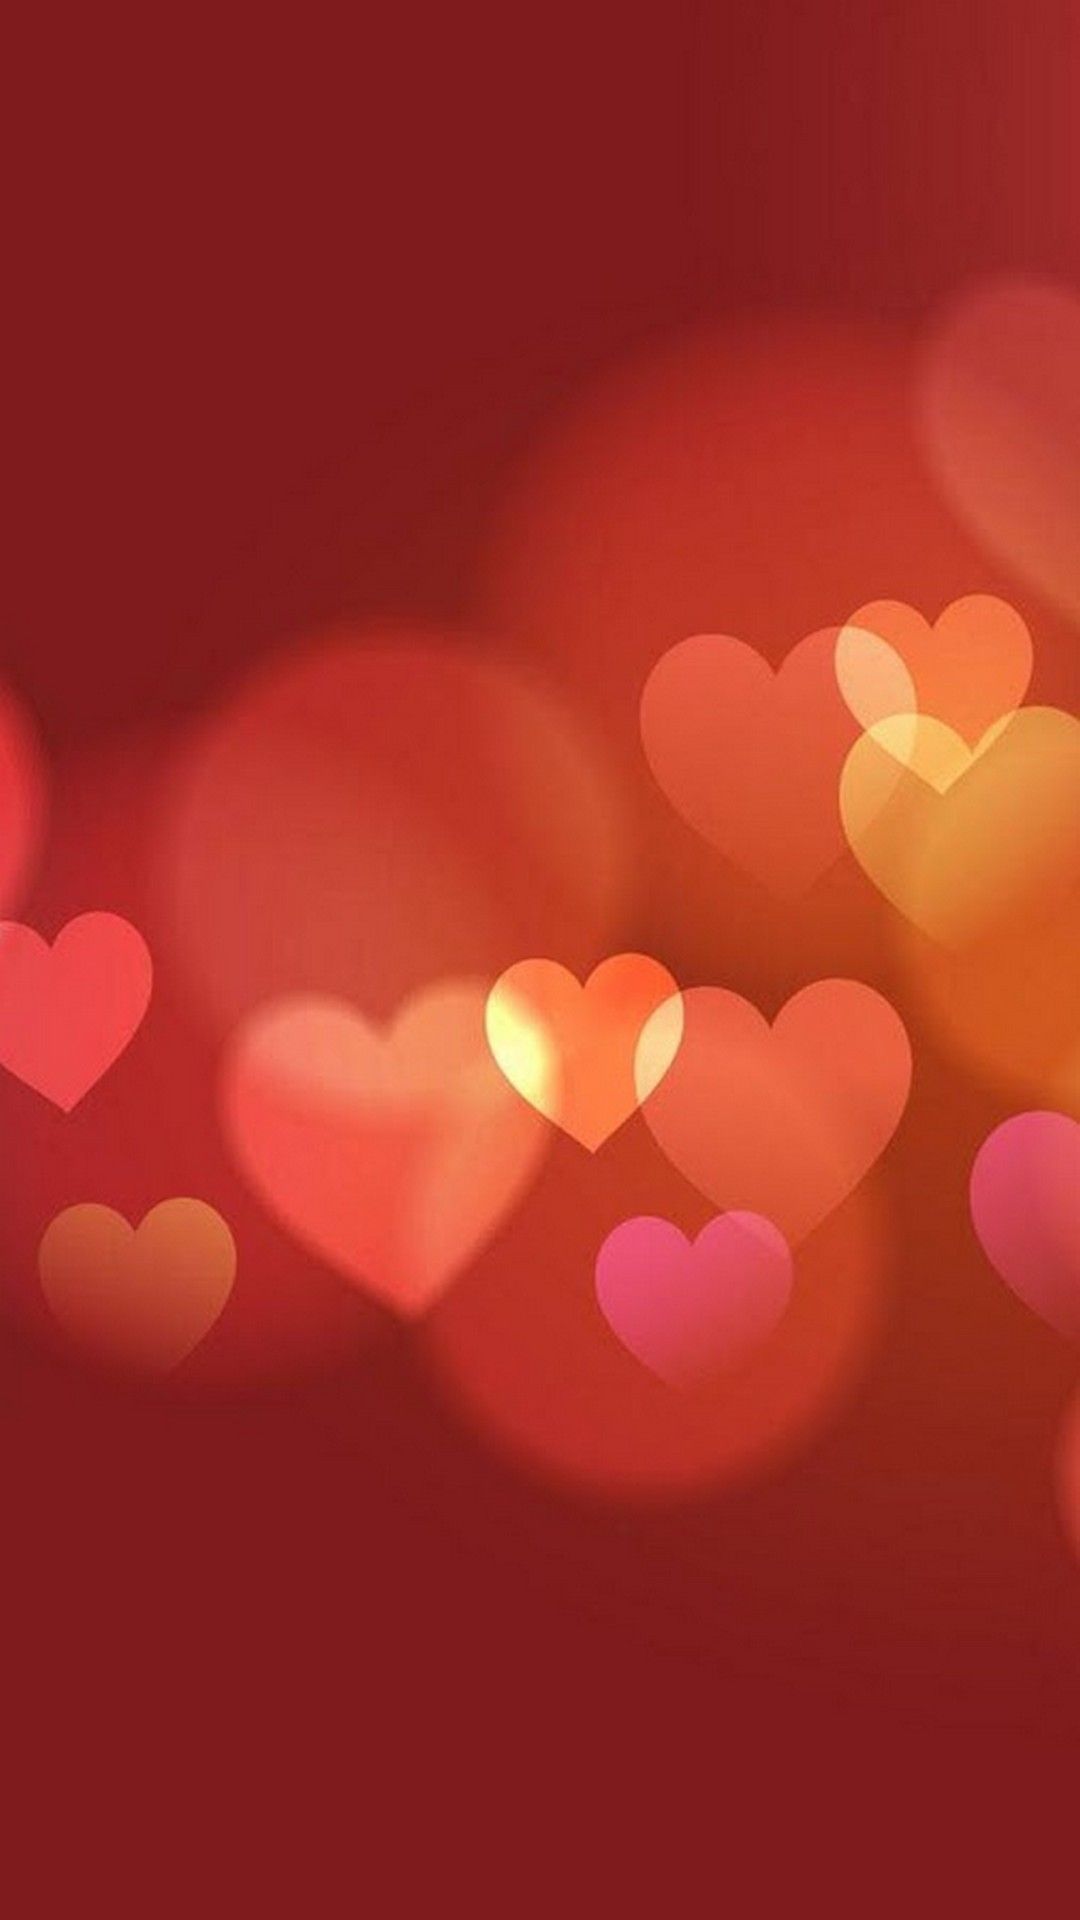 Cute Valentines Day Wallpaper iPhone L O V E H A R T